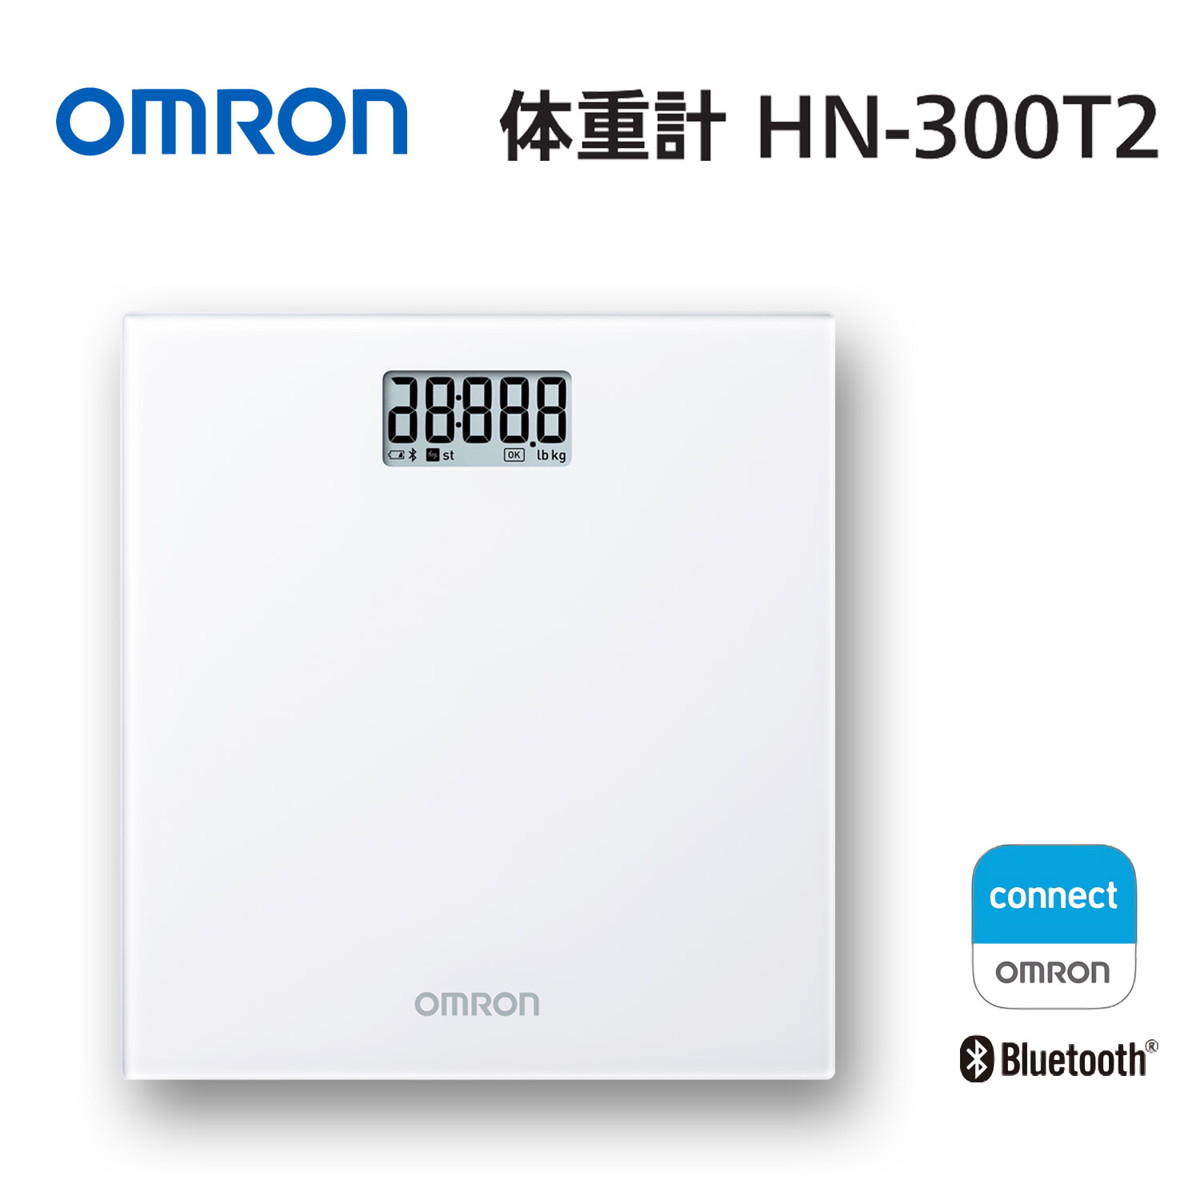 OMRON 体重計 スマホアプリ「OMRON connect」対応 ホワイト